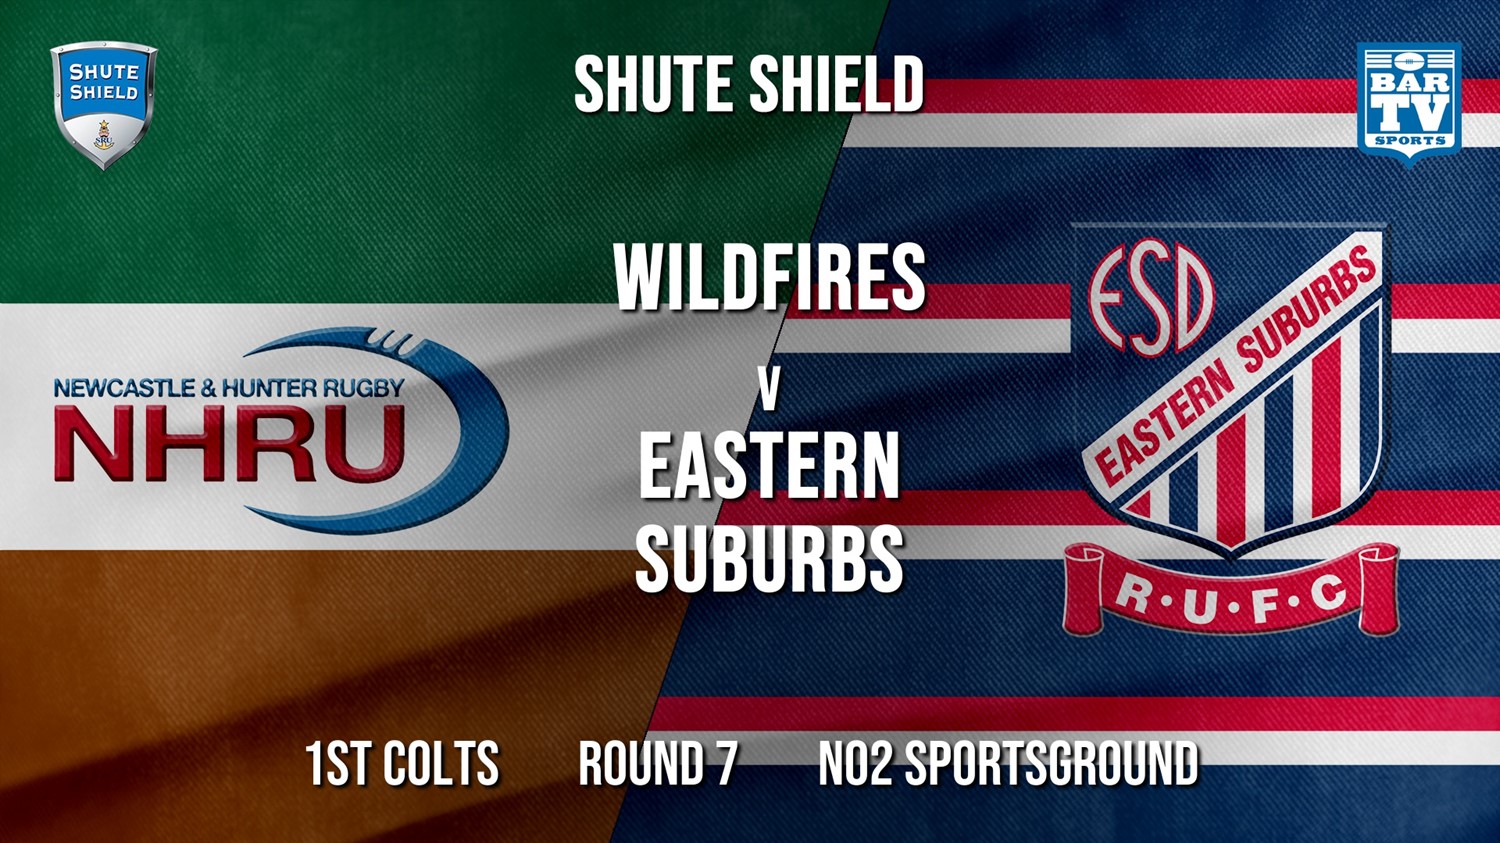 Shute Shield Round 7 - 1st Colts - NHRU Wildfires v Eastern Suburbs Minigame Slate Image